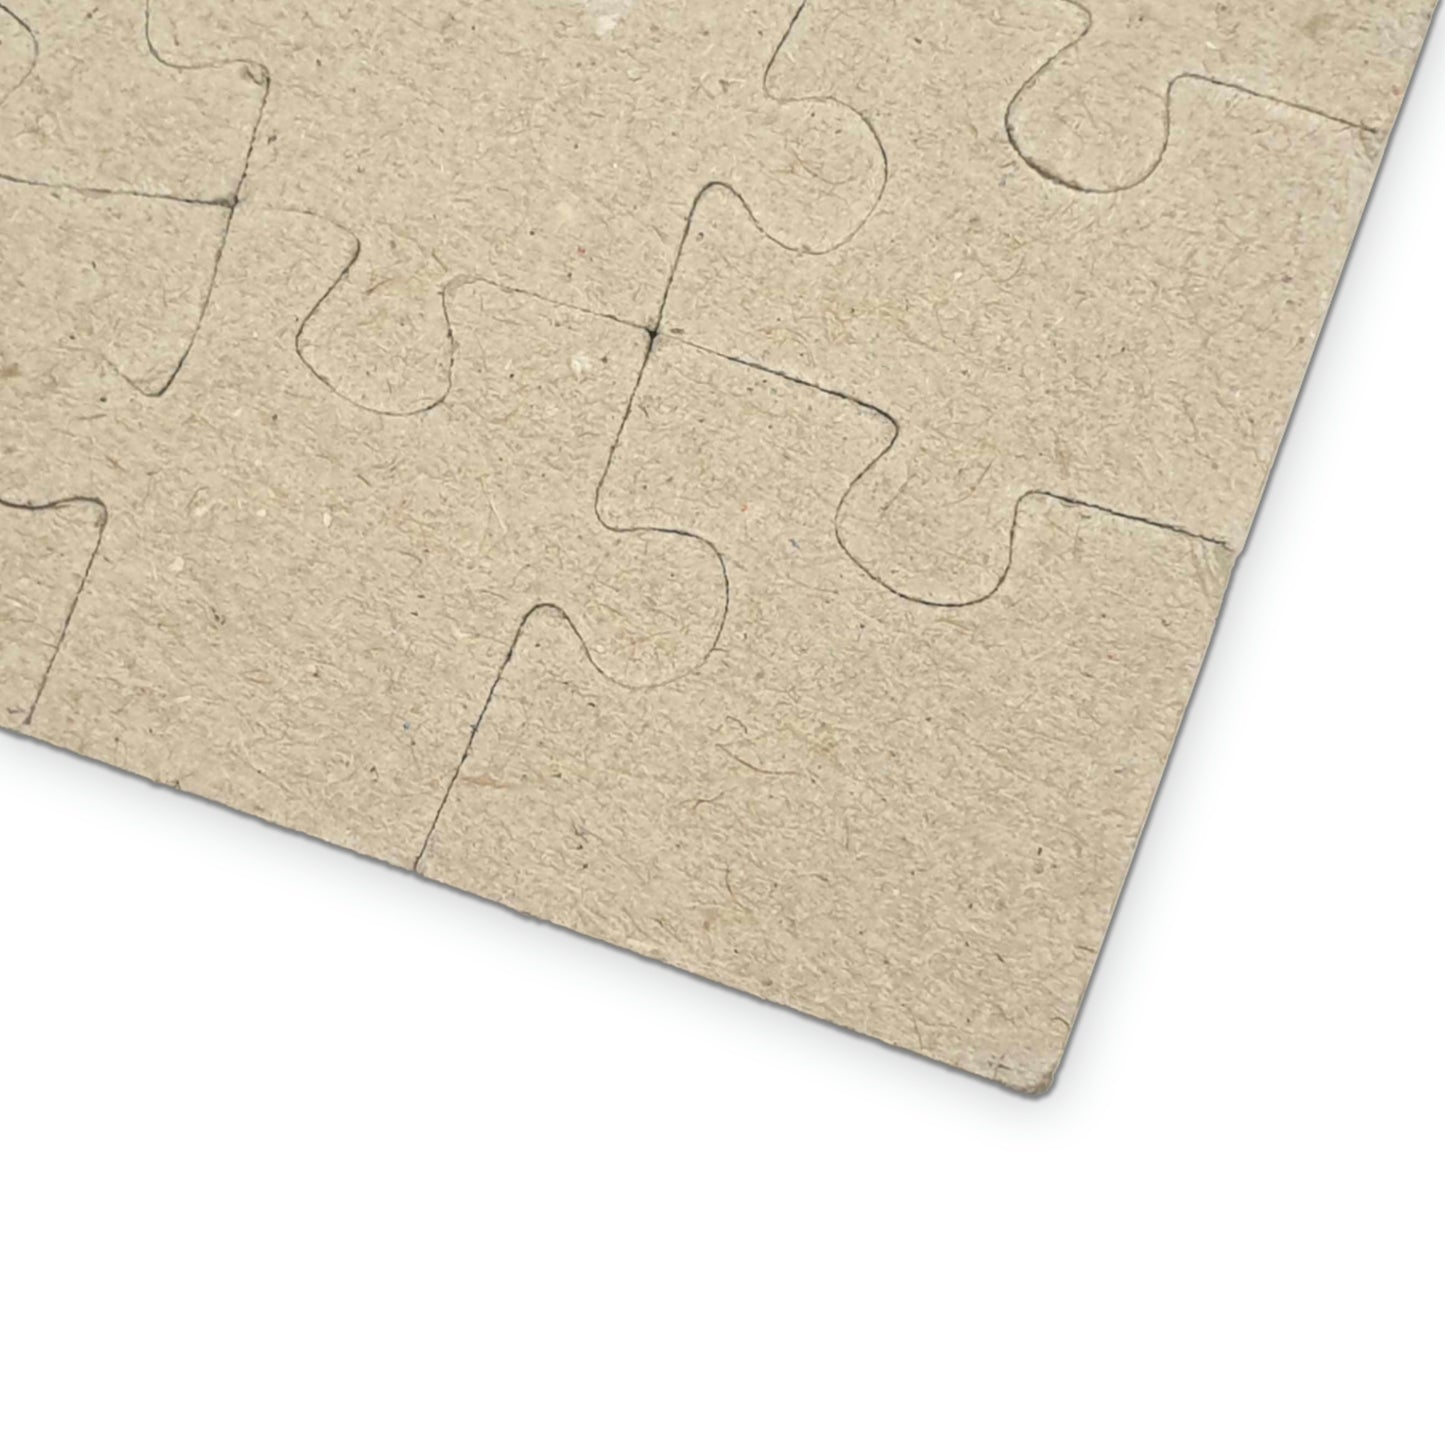 Yardbird - 1000 Piece Jigsaw Puzzle